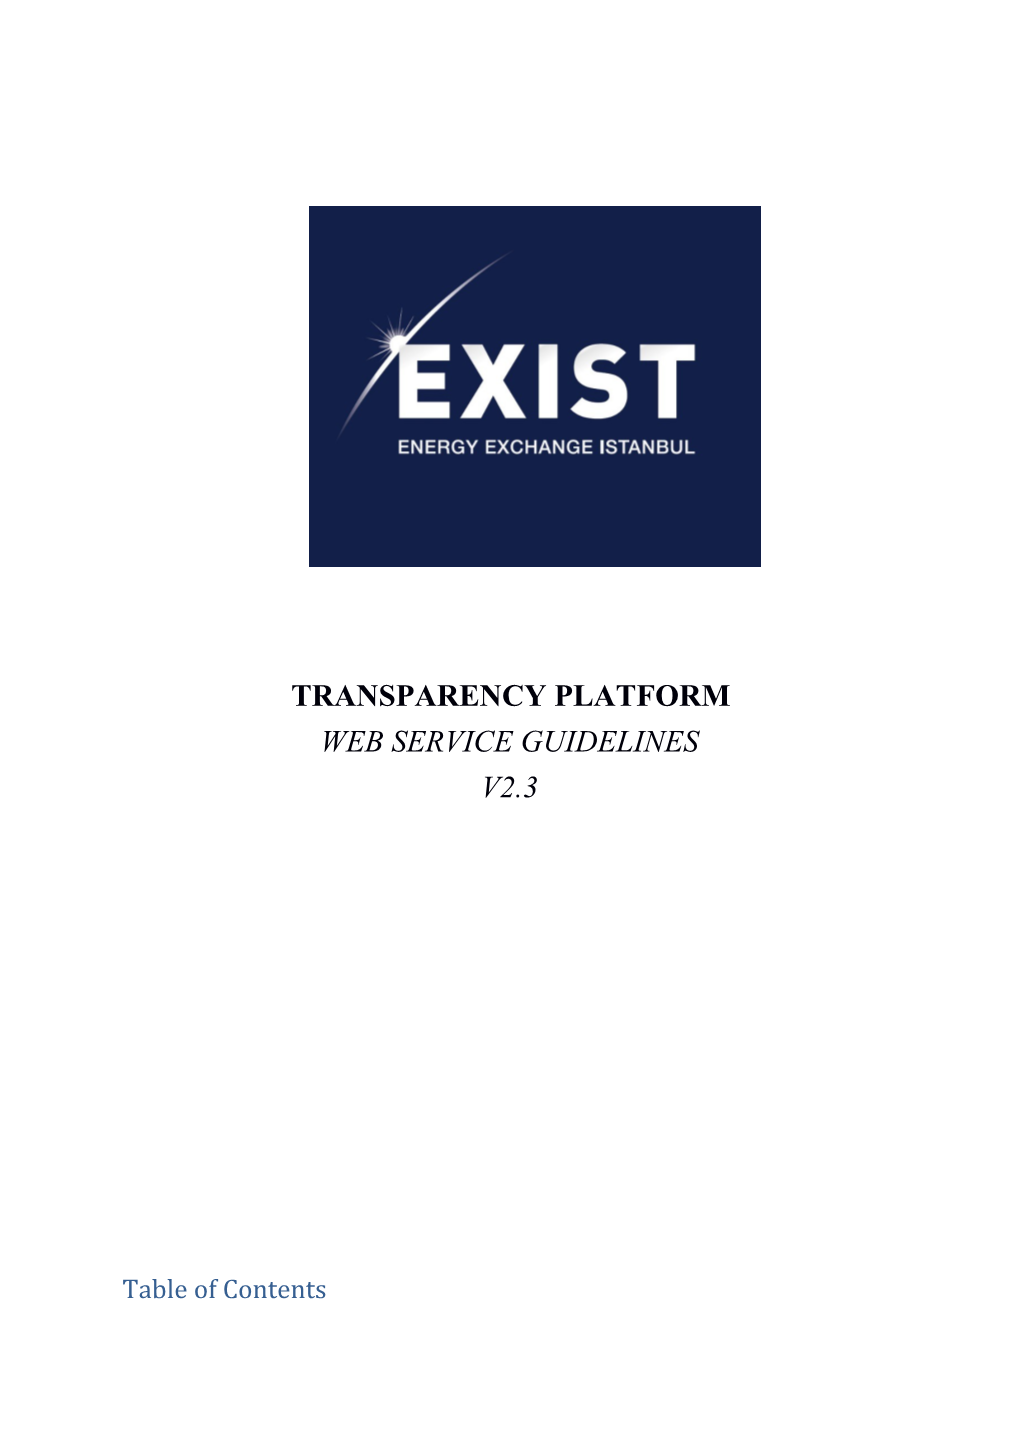 Transparency Platform